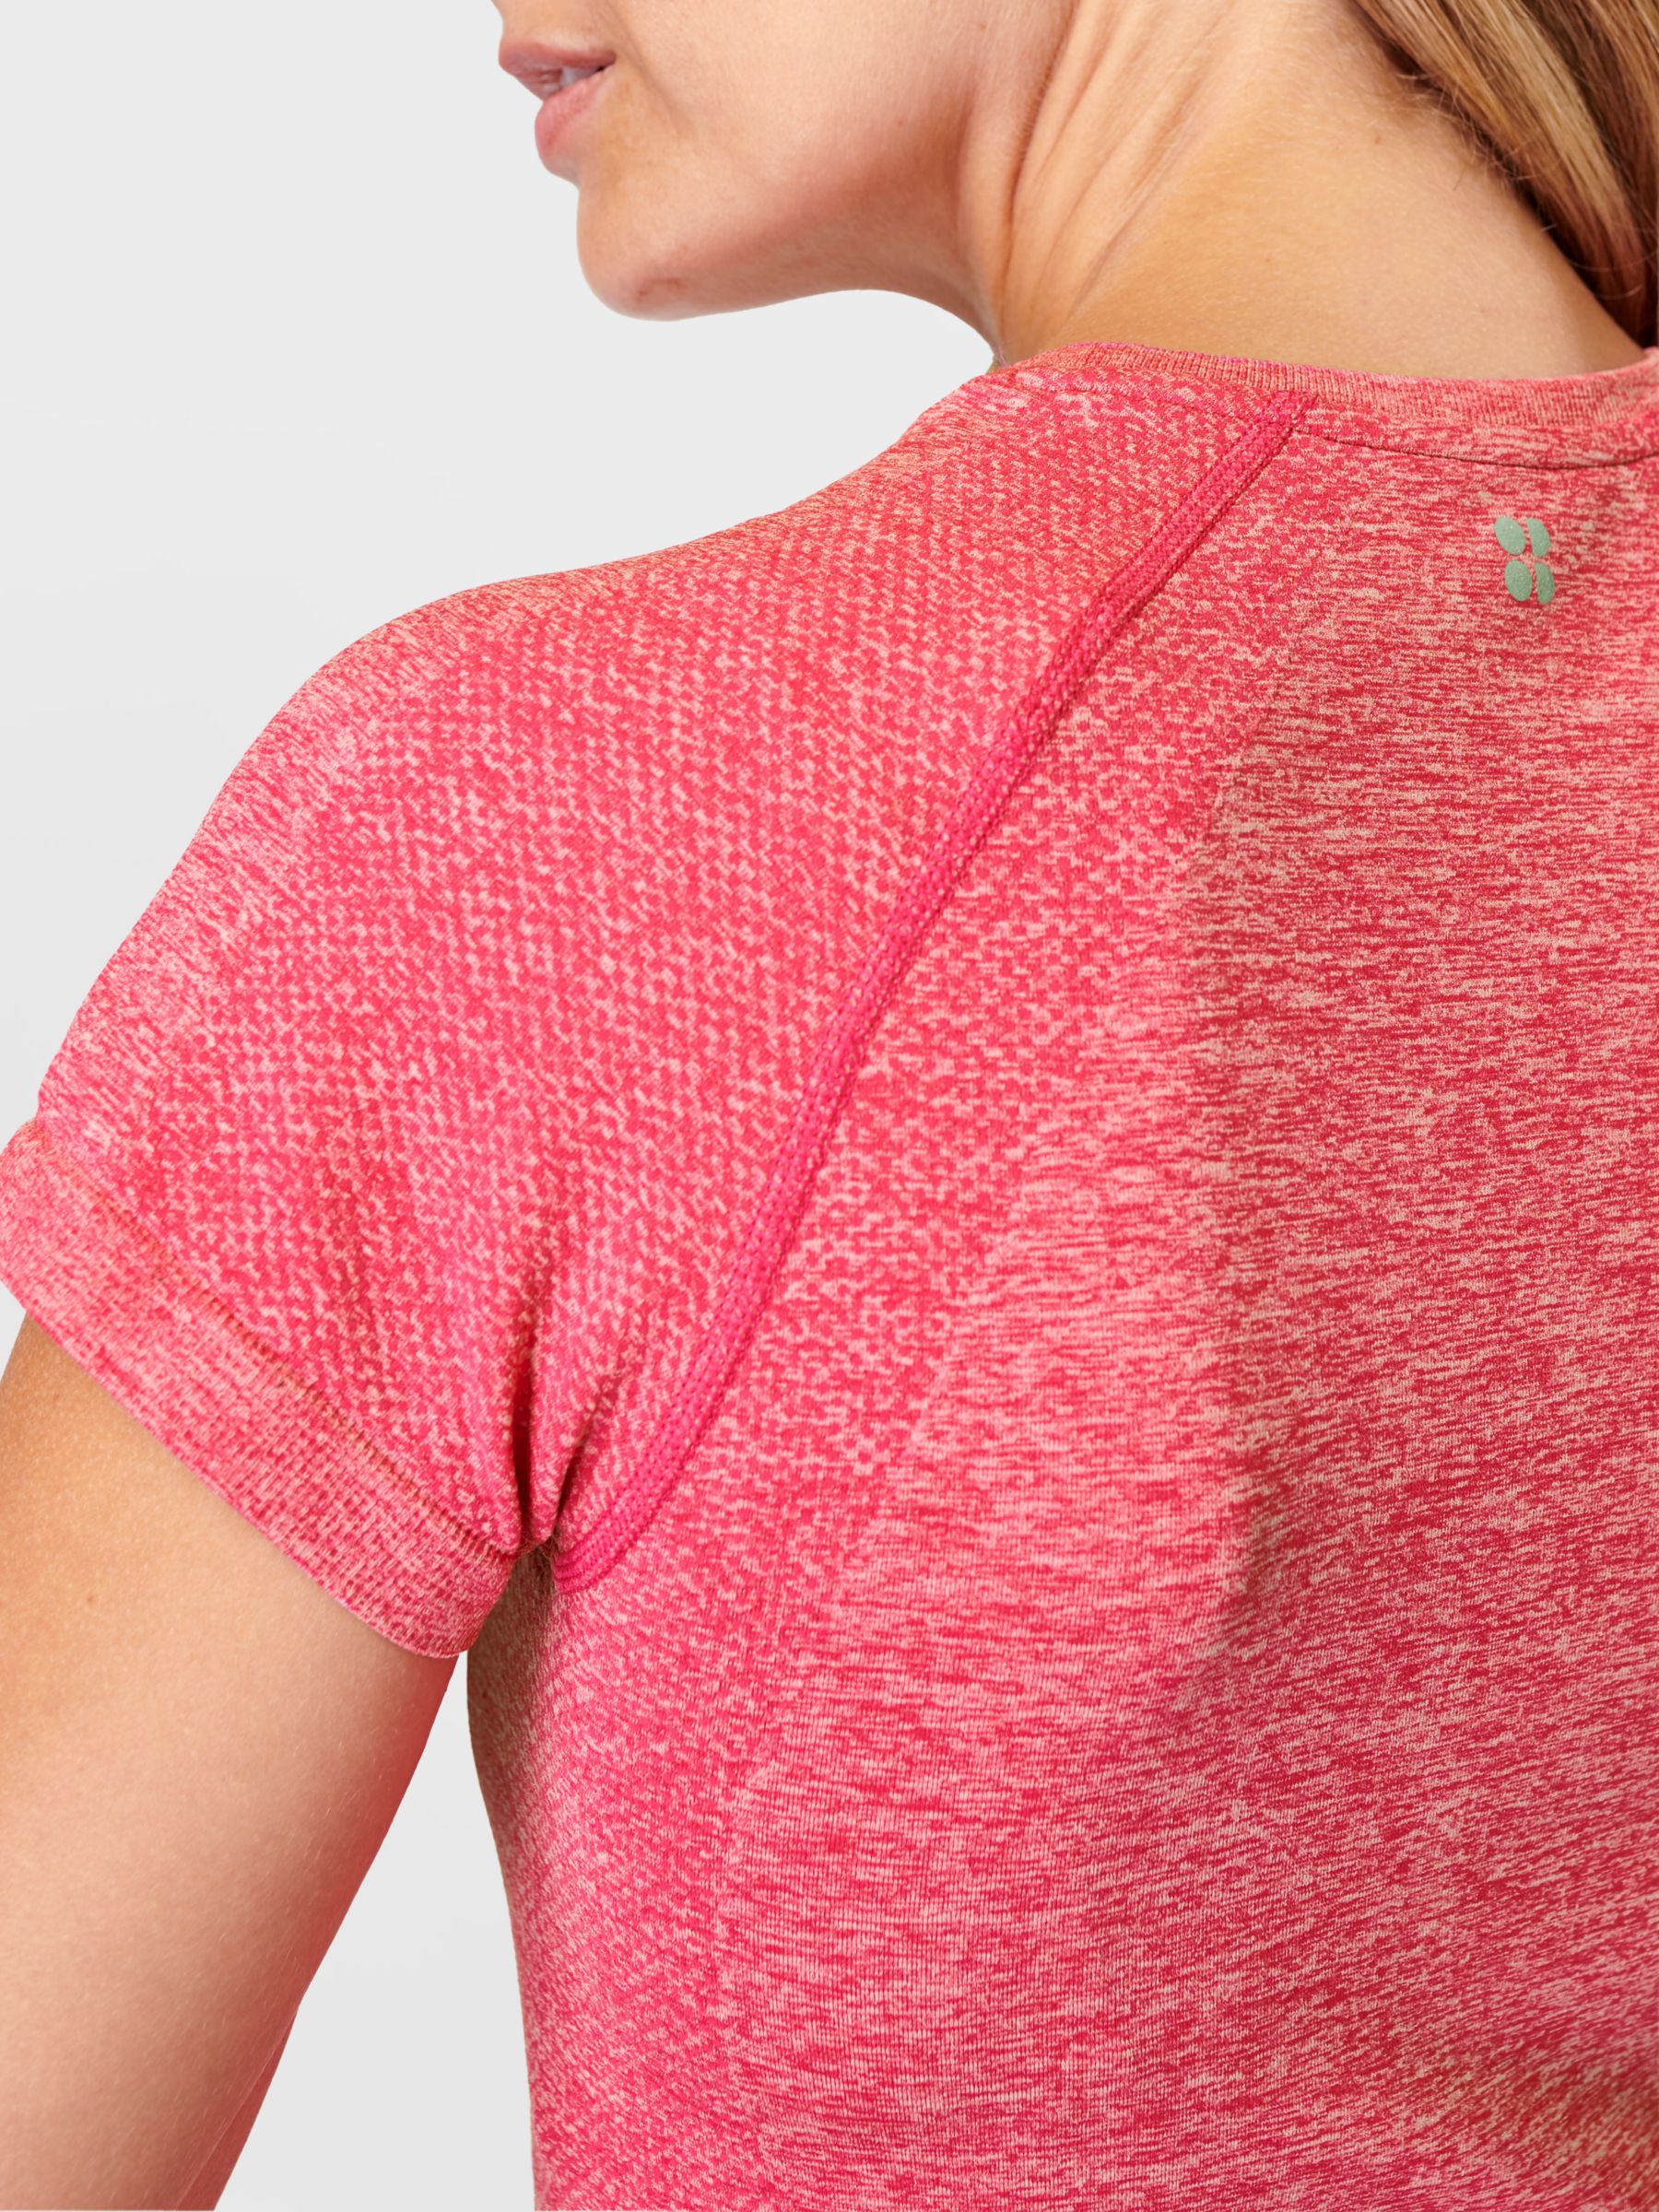 Buy Sweaty Betty Athlete Seamless Workout T-Shirt Online at johnlewis.com